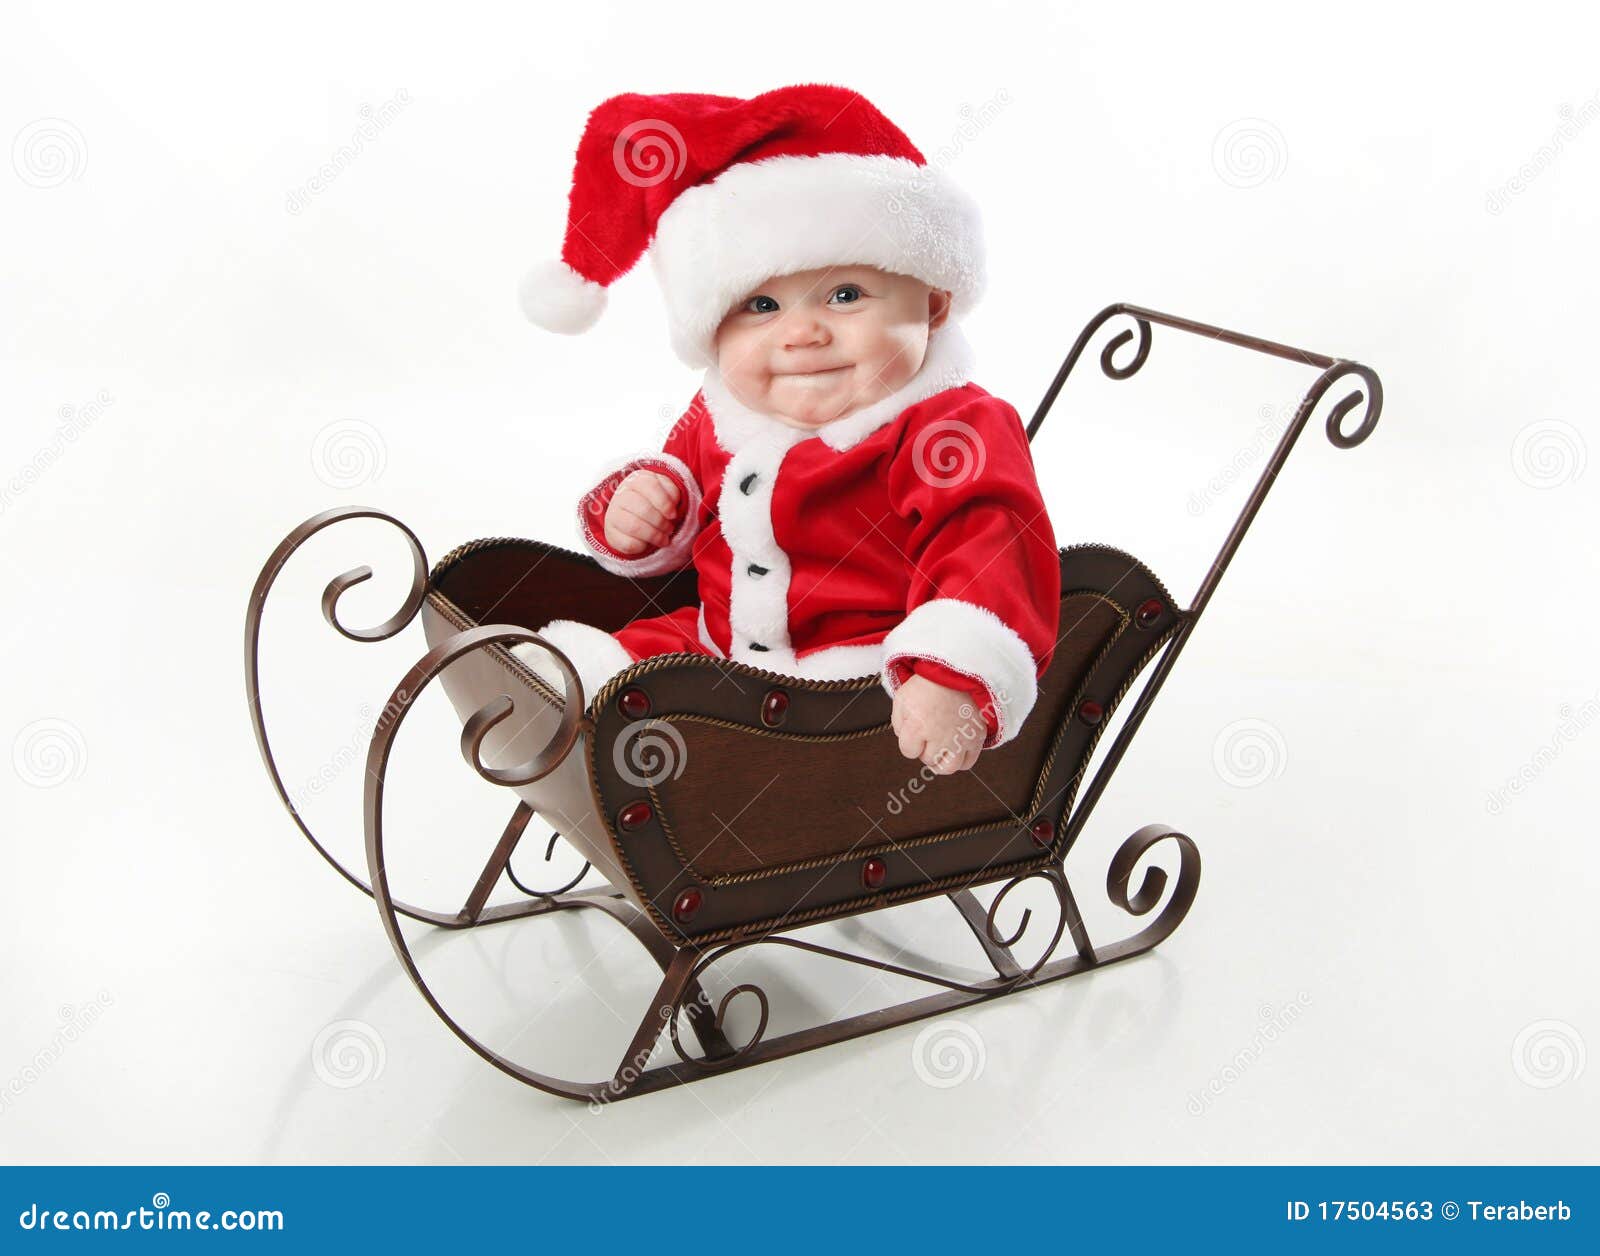 santa baby sitting in a sleigh